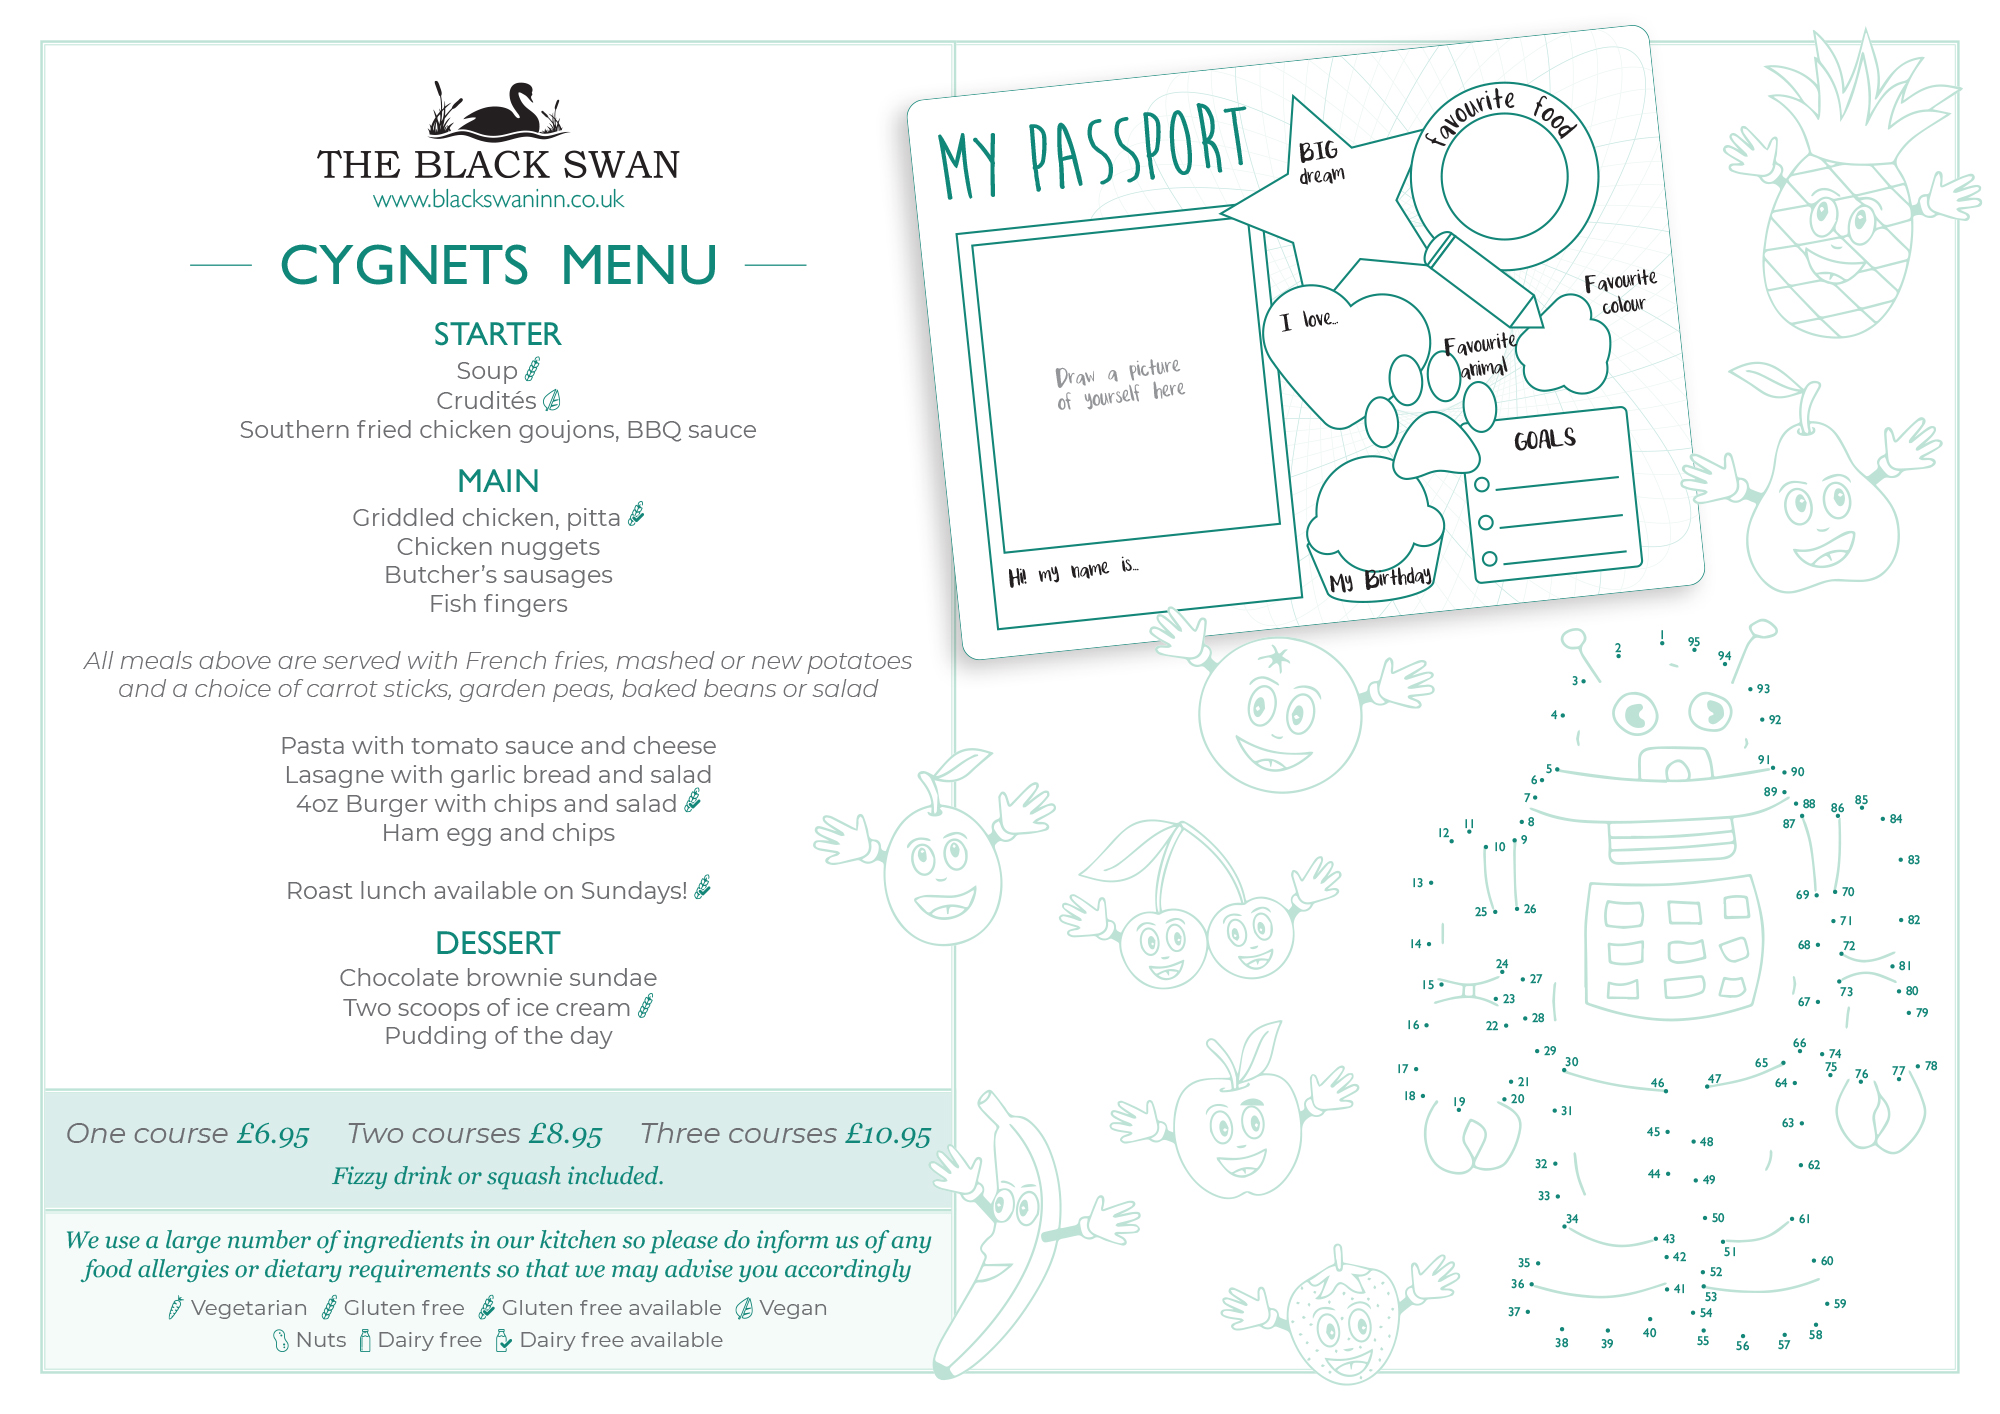 Cygnets menu